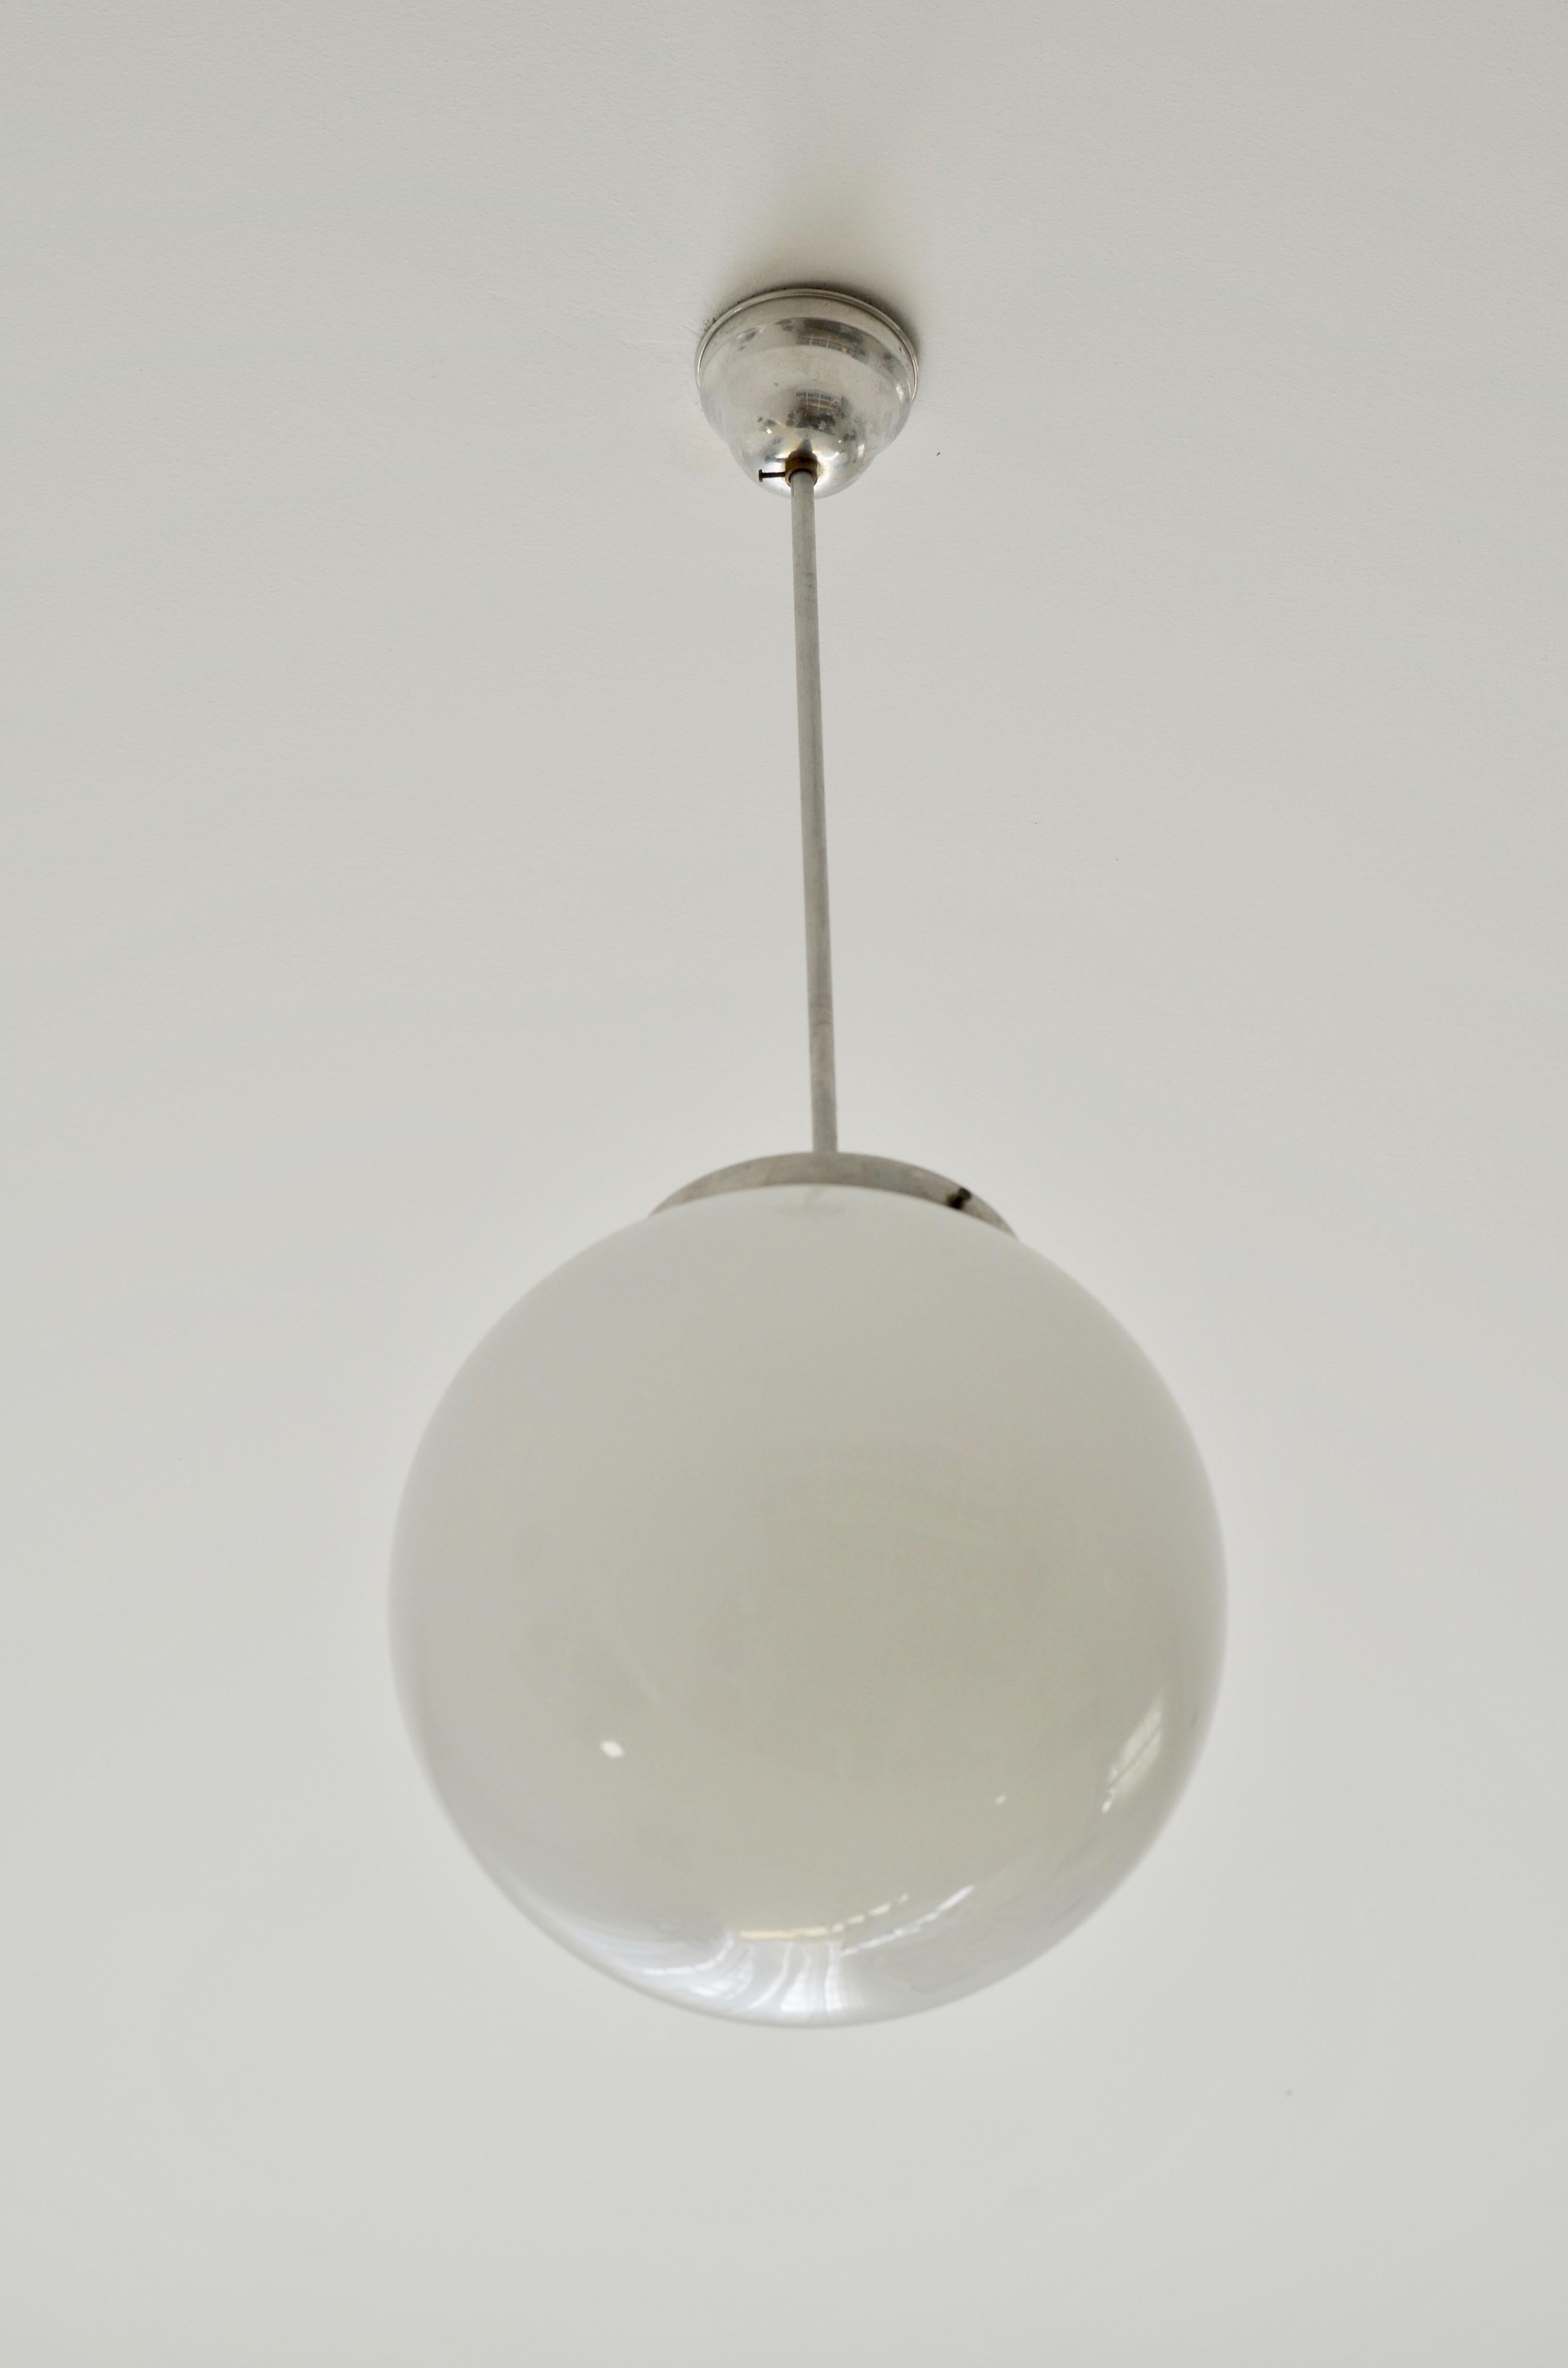 Bauhaus Style Pendant Light

Producer: EMI Poljčane, Slovenia, Yugoslavia

Period of Production: 1950s

Material: opaline glass, aluminum

Diameter: 29cm